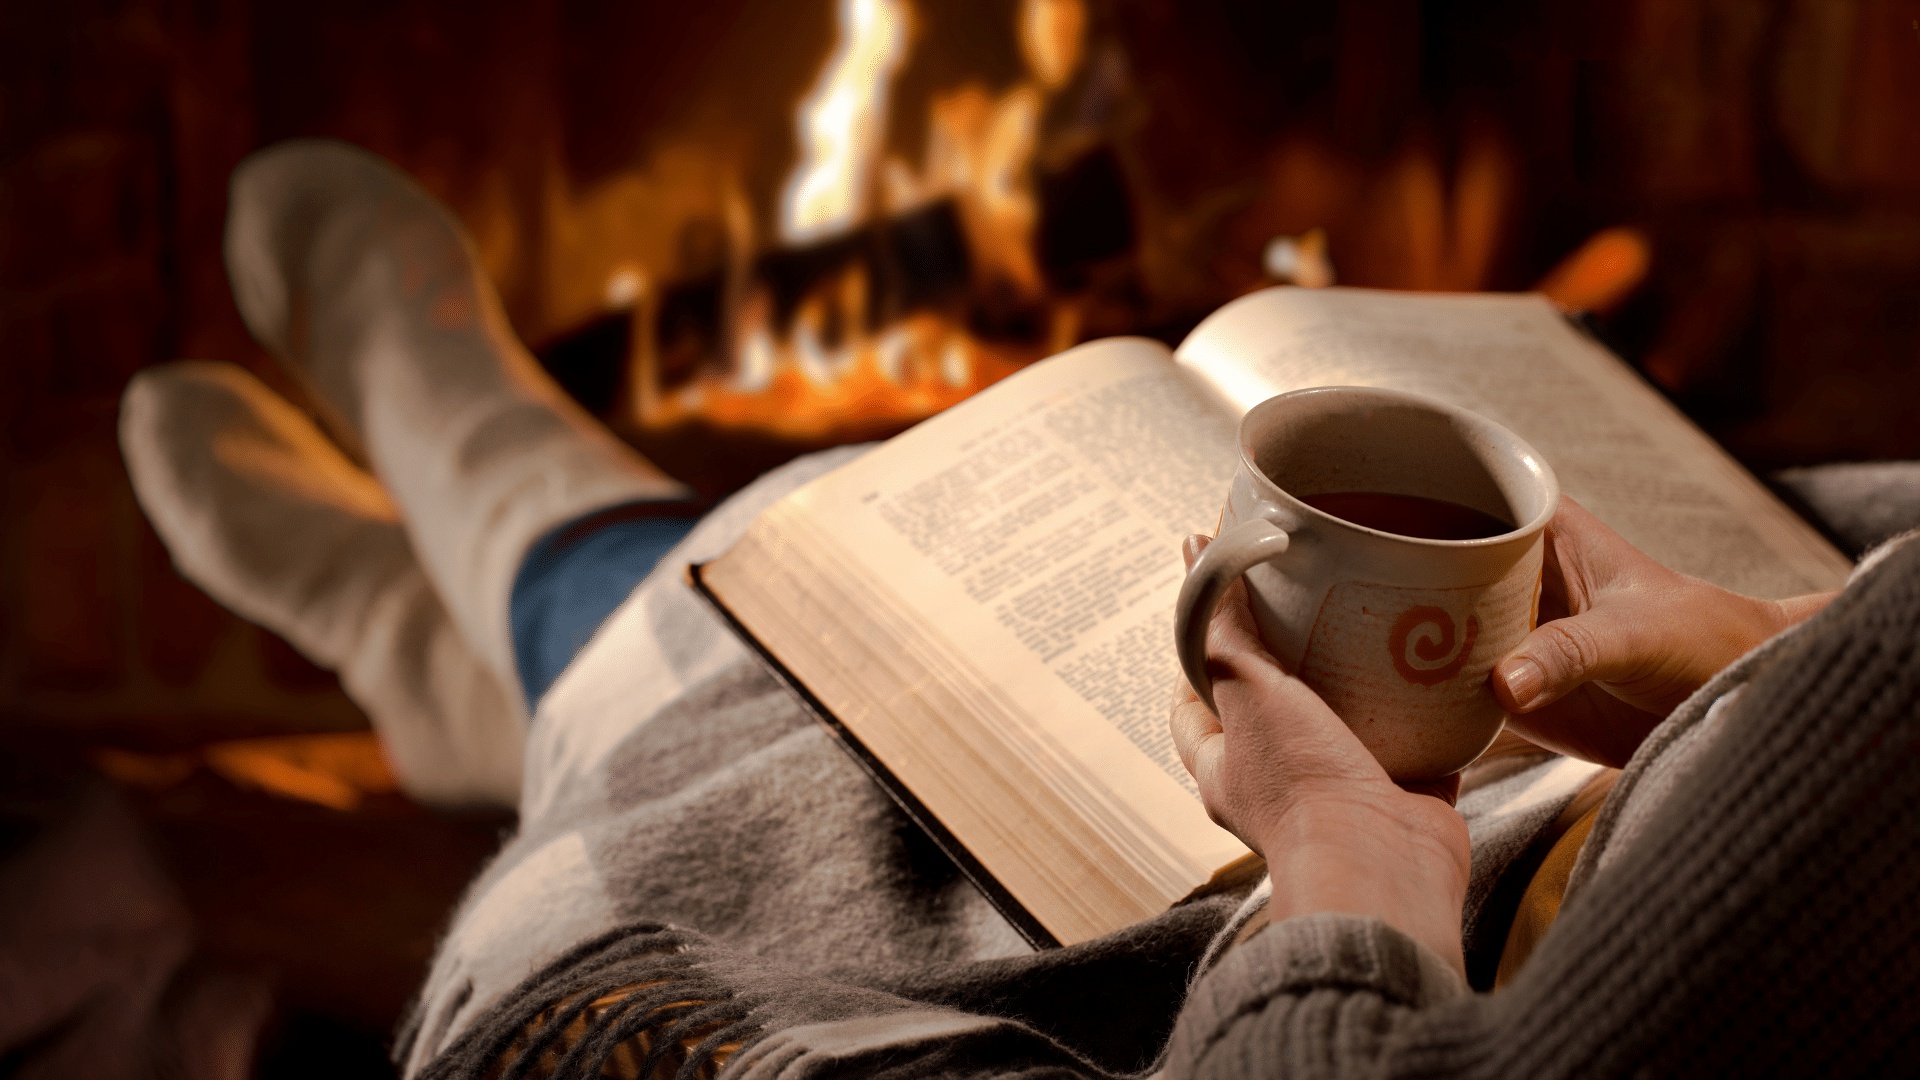 Mood Tea Book Fireplace Legs 1920x1080